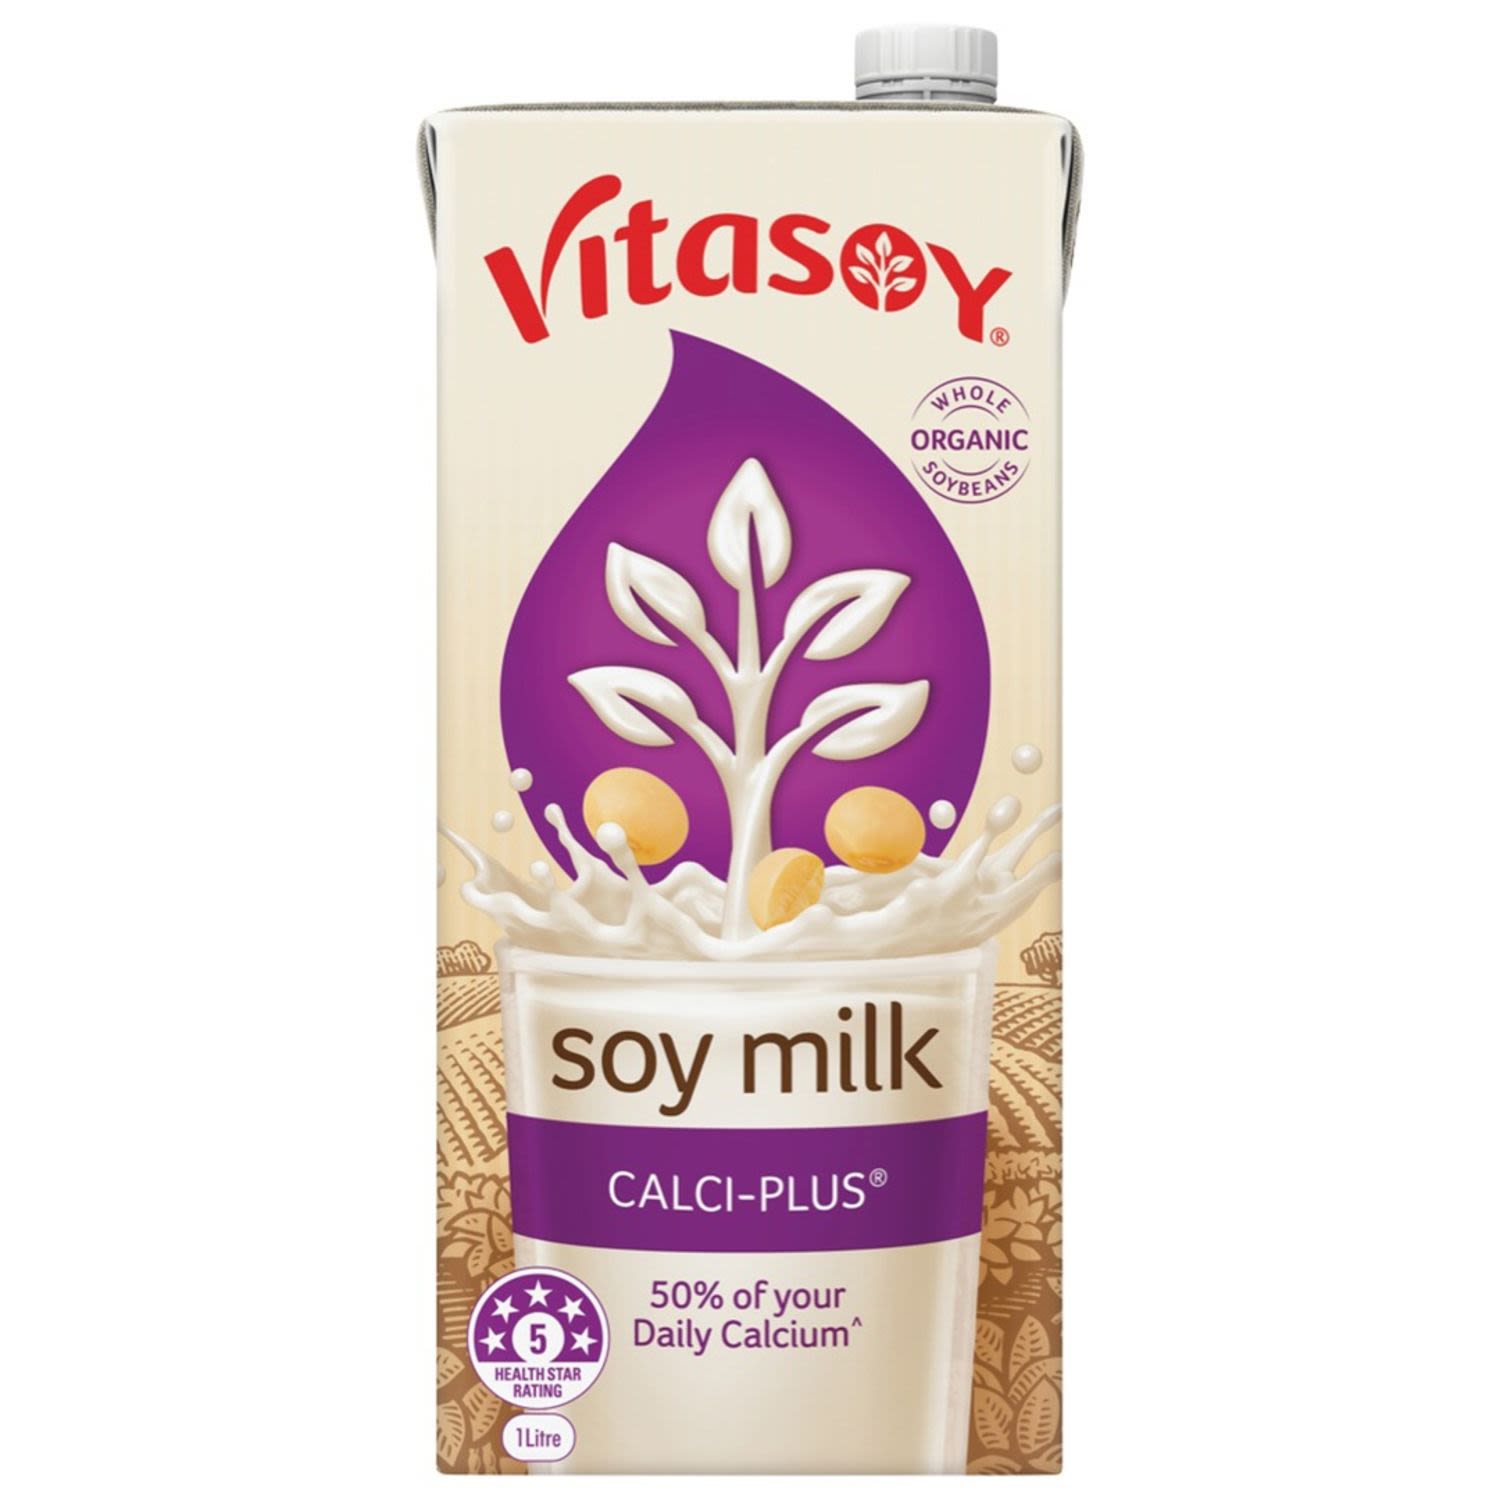 Vitasoy Soy Milk Calci-plus, 1 Litre